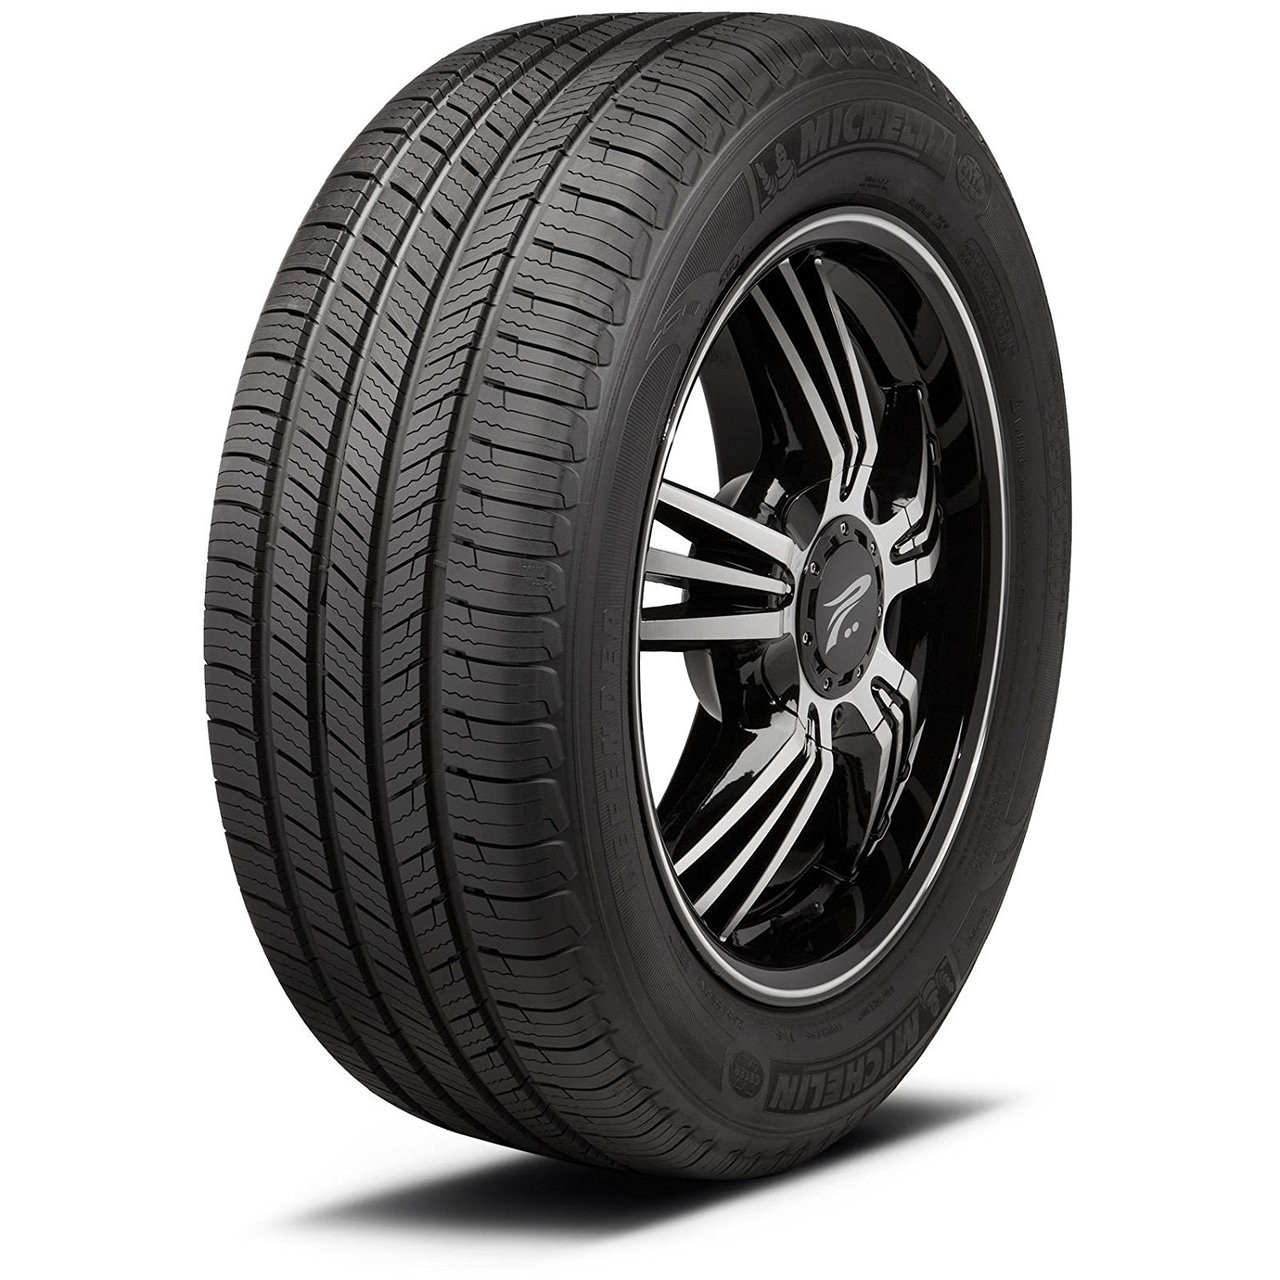 205/60-16 Tires